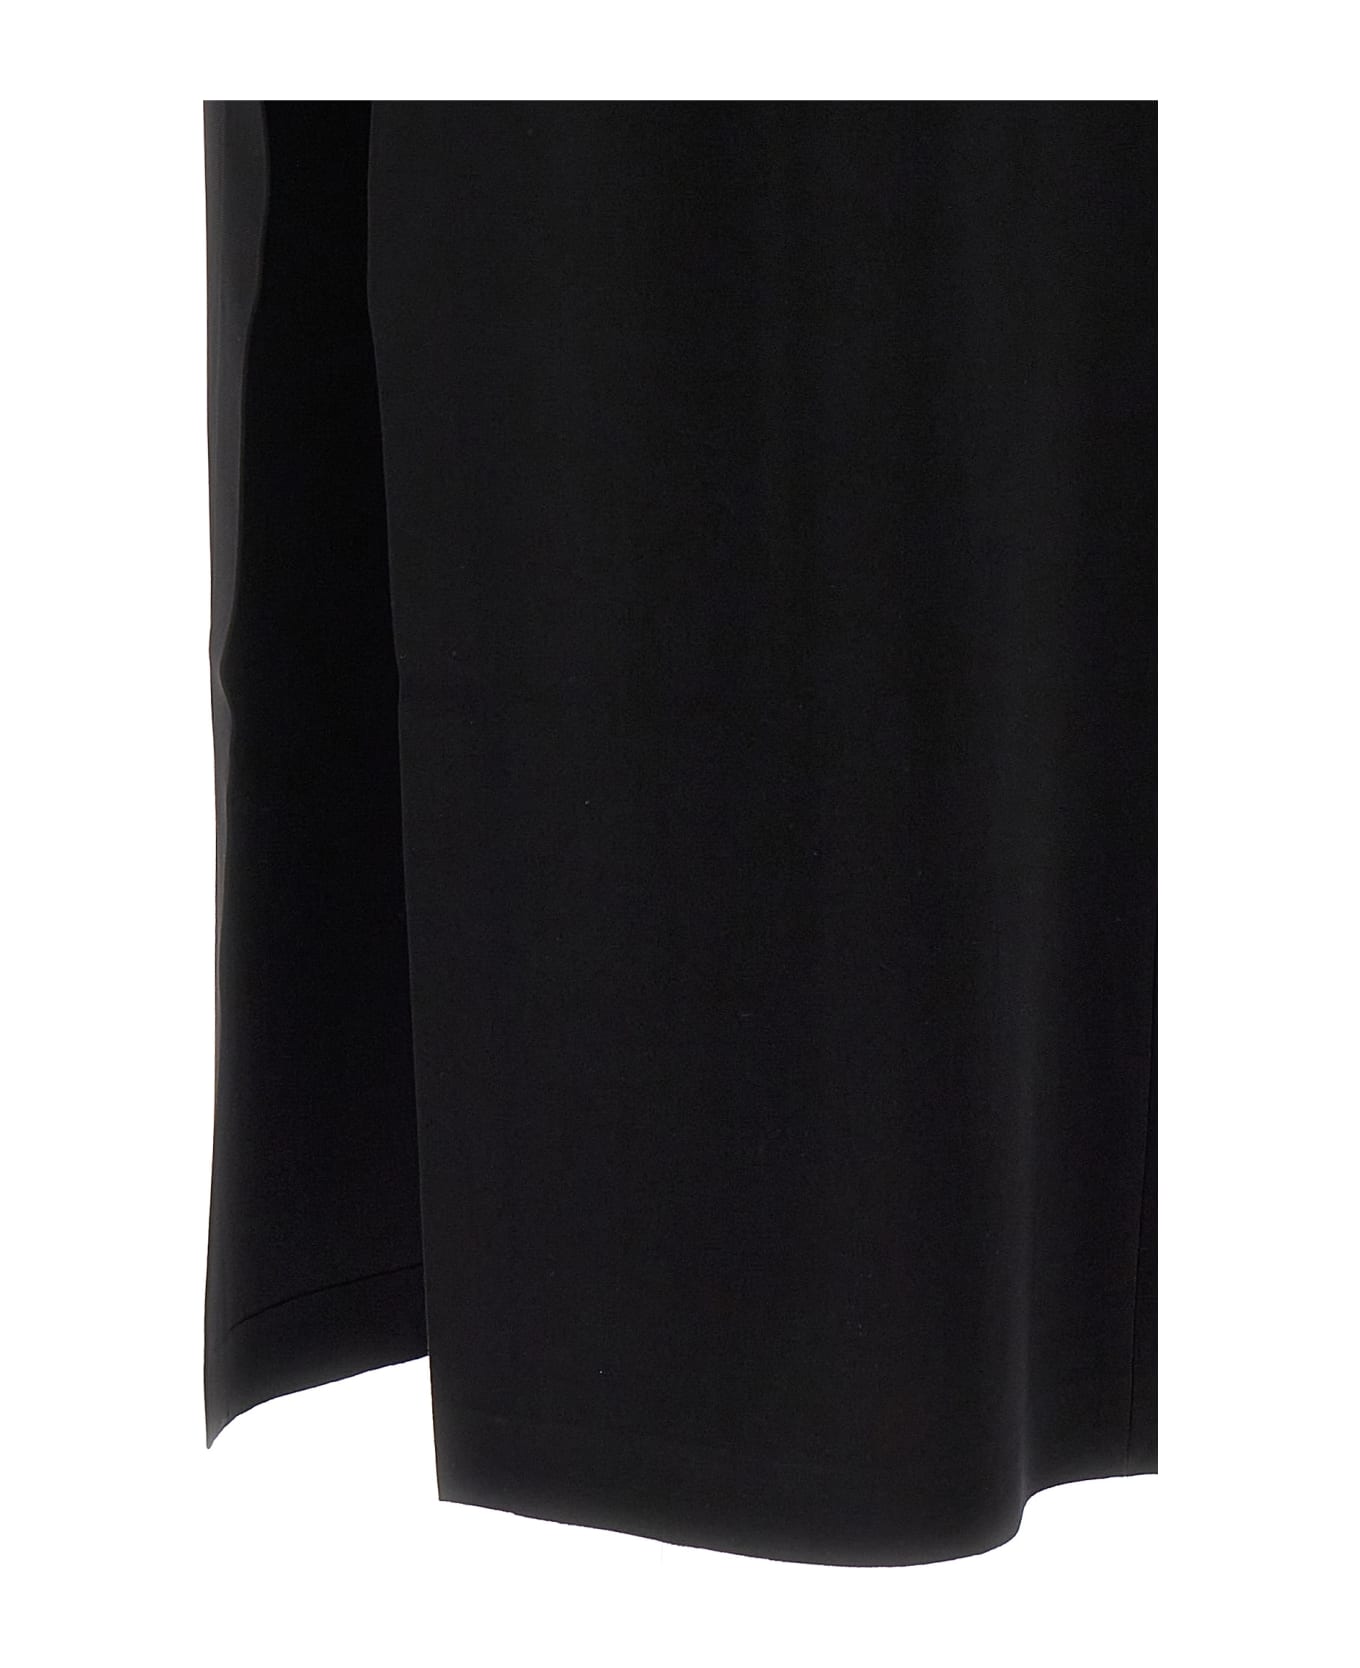 Norma Kamali Long Skirt Wide Slit - Black   スカート